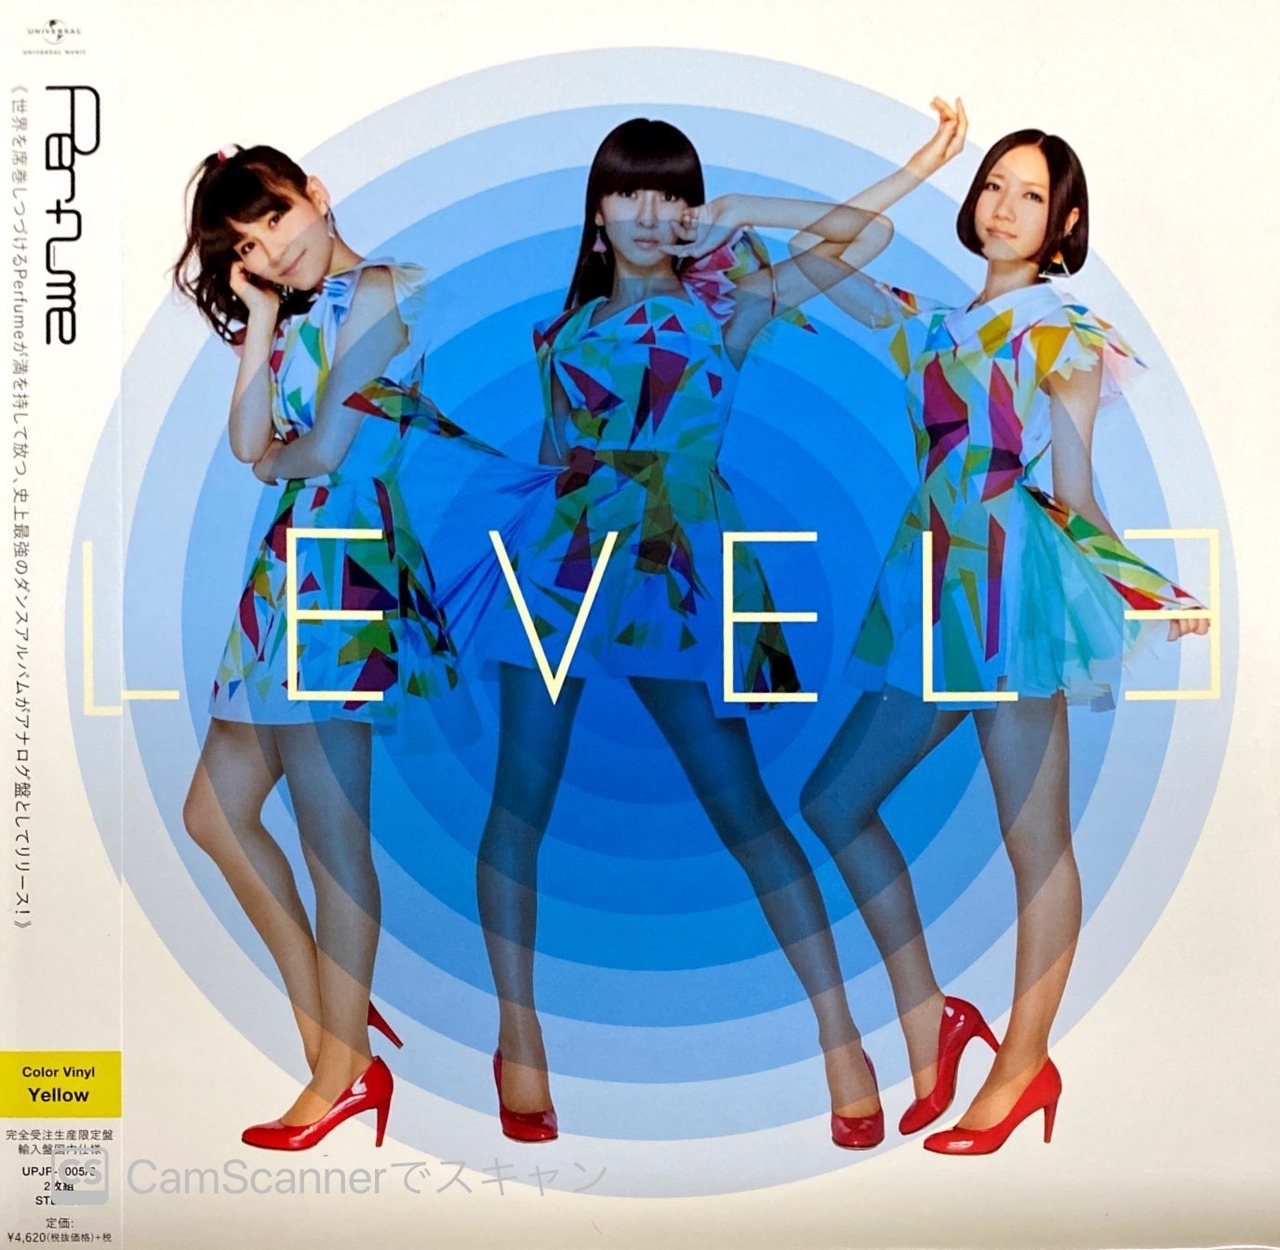 Perfume 「LEVEL3」12インチアナログ盤（Color Vinyl・イエロー）